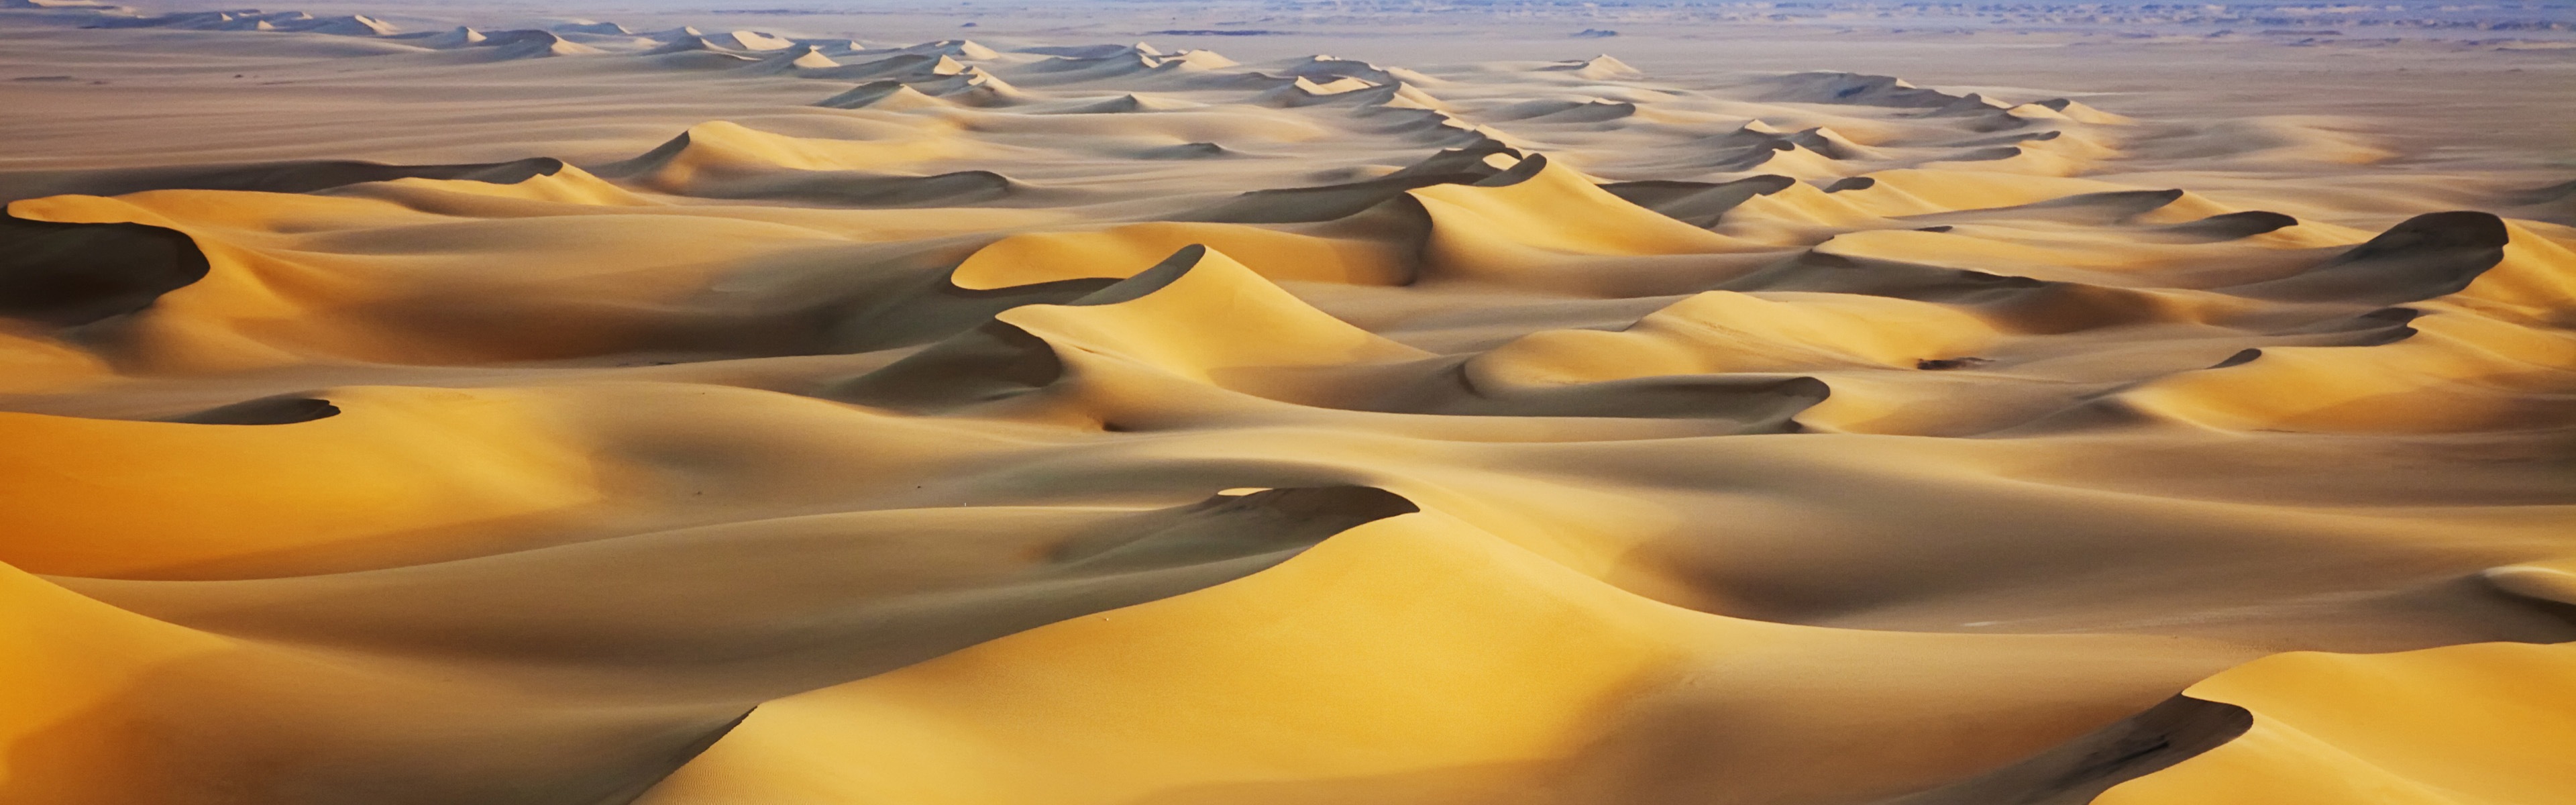 Desiertos calientes y áridas, de Windows 8 fondos de pantalla de pantalla ancha panorámica #4 - 3840x1200